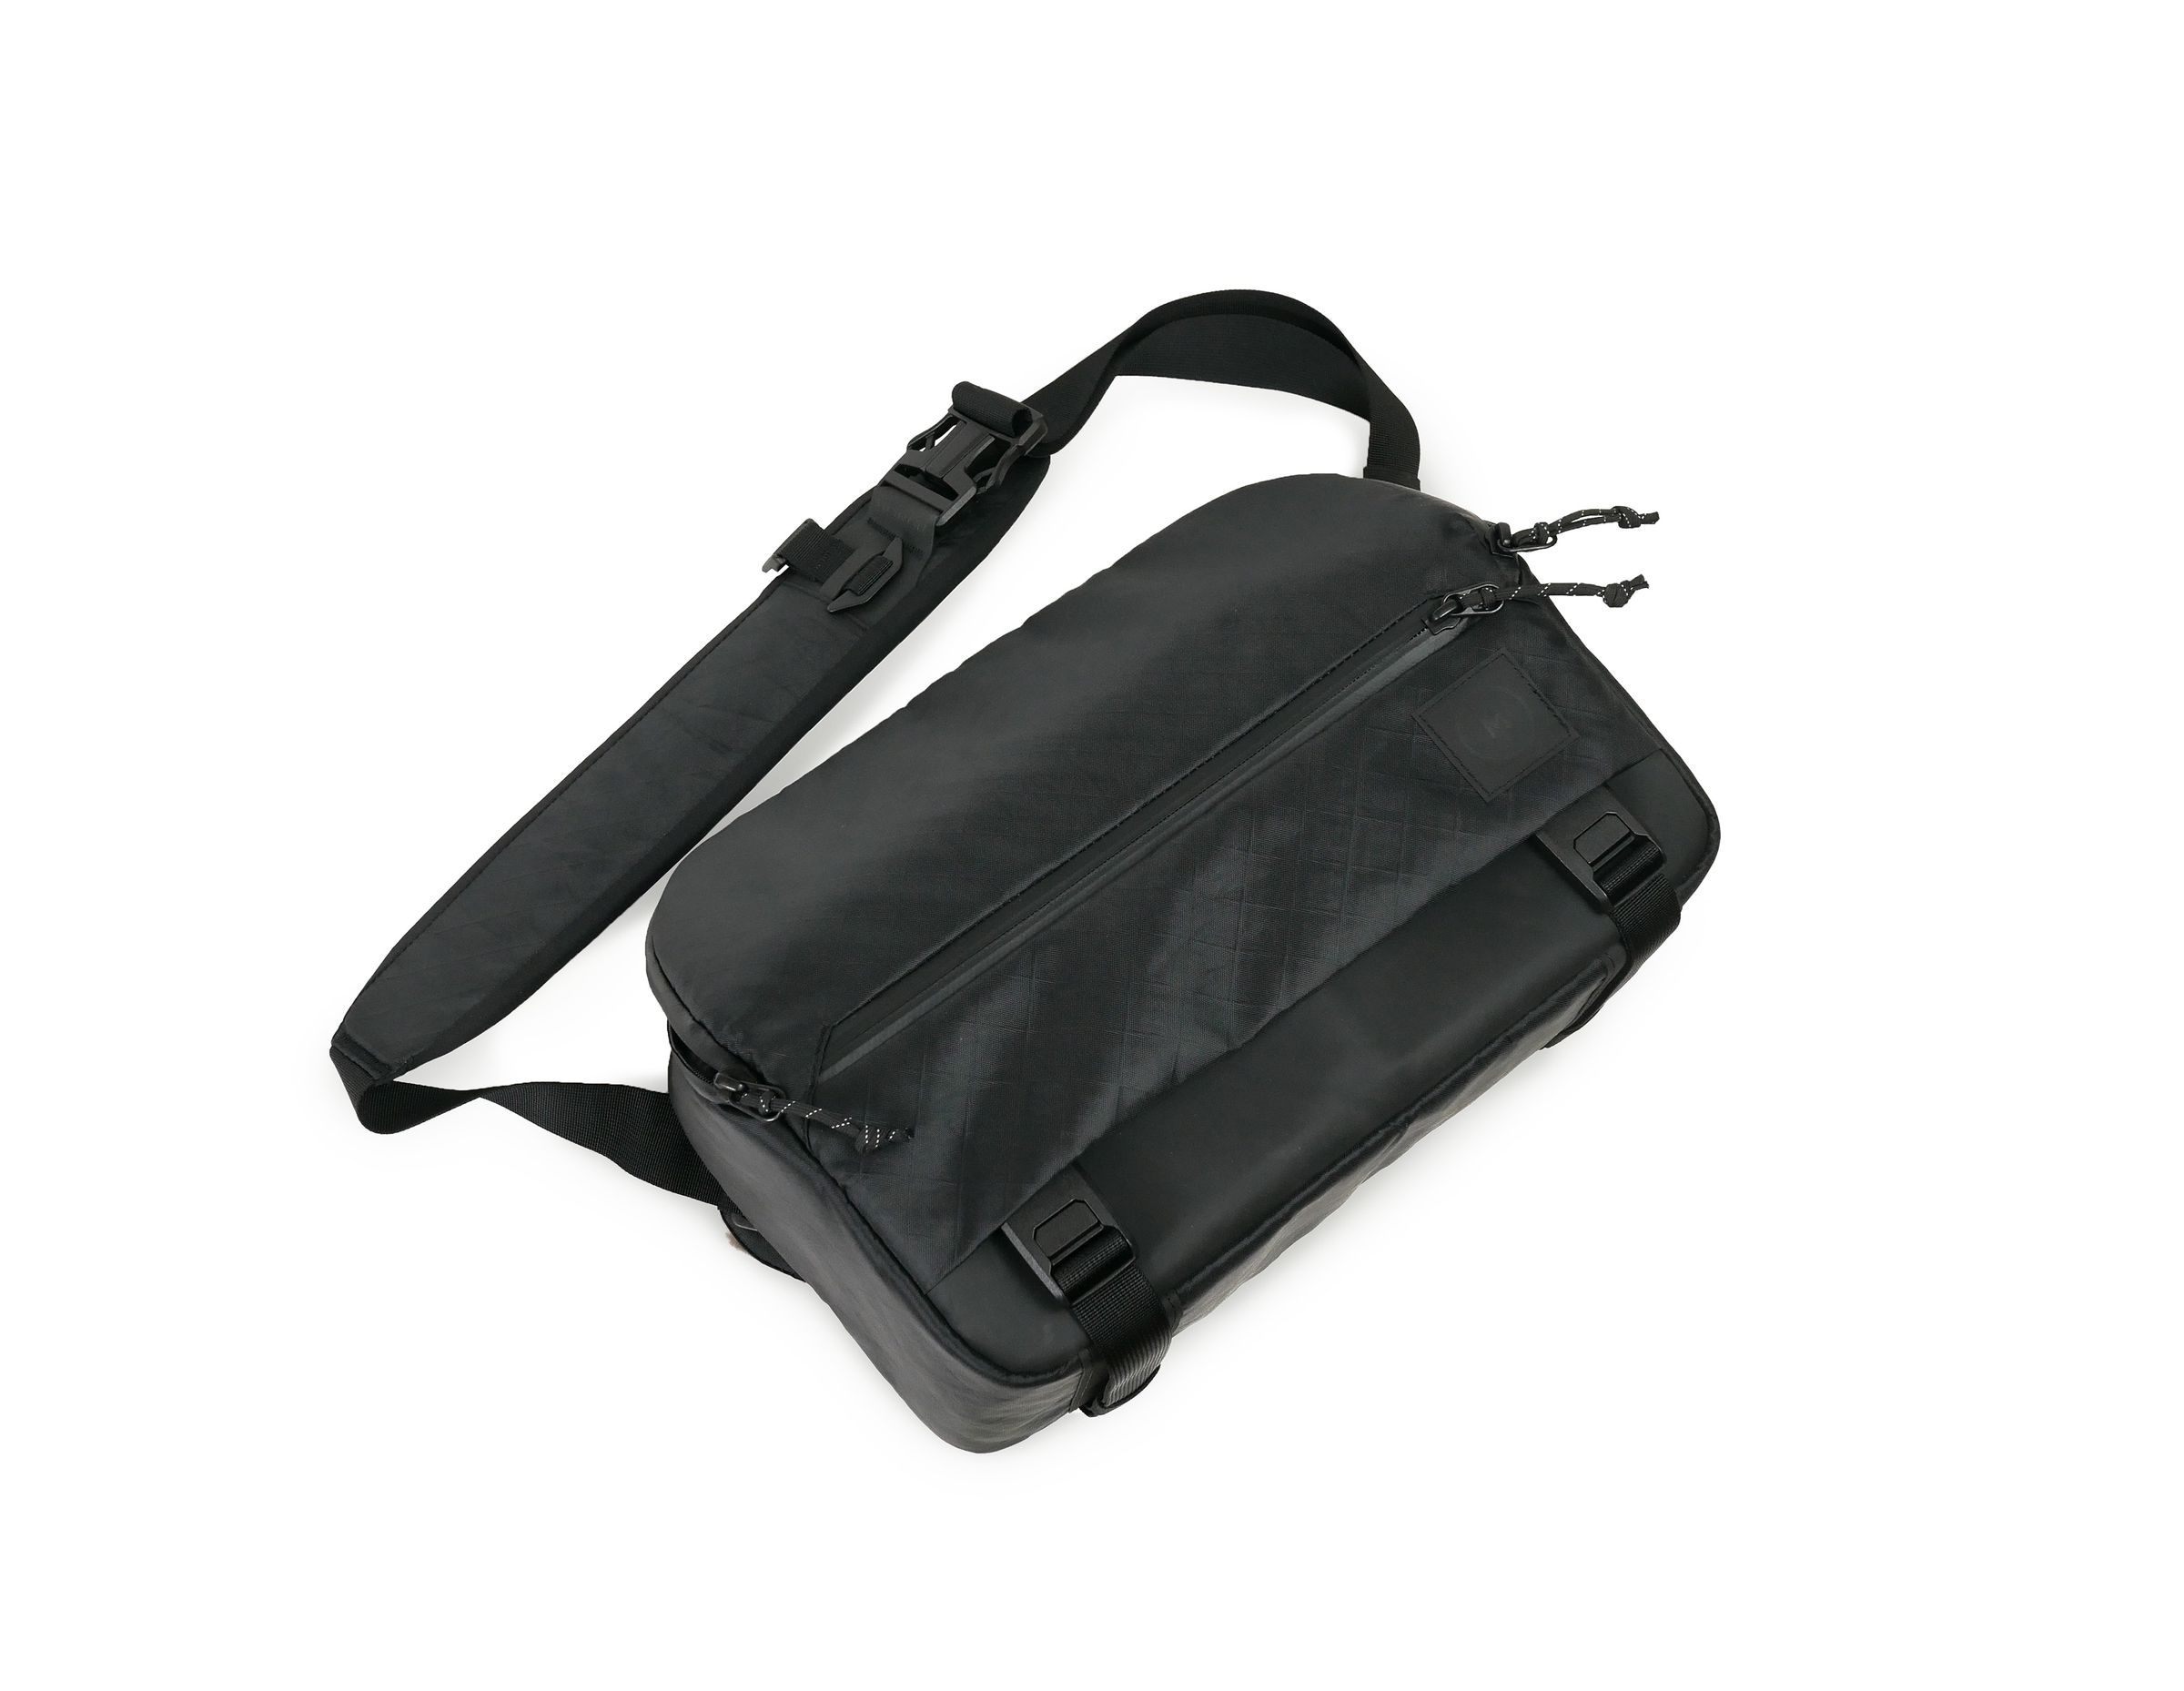 A black 10-liter Moment Rugged Sling bag on a white background